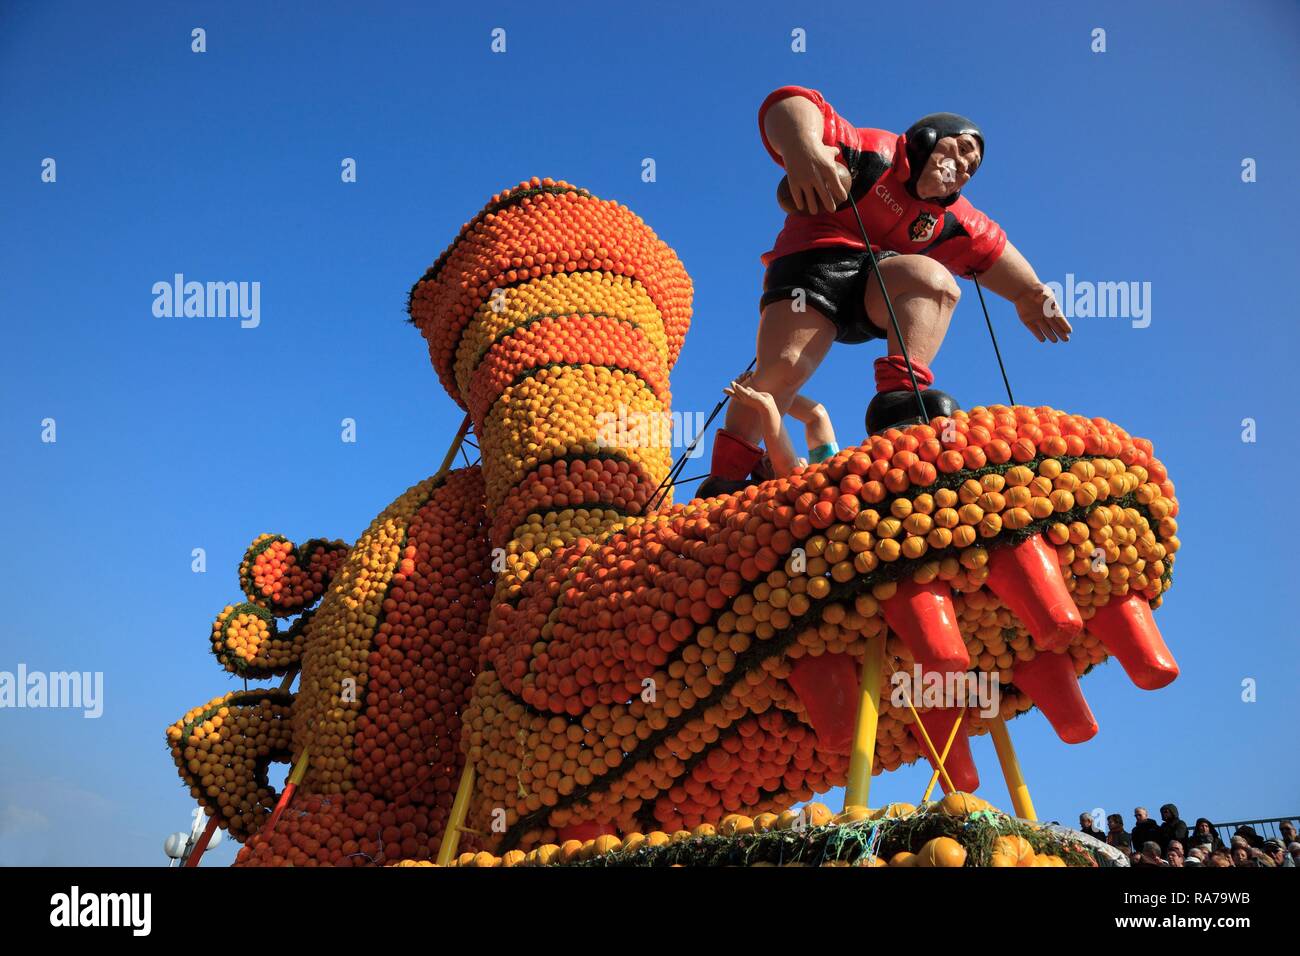 Athlete's doll on a float made of citrus fruits at a parade, Lemon Festival, Fete du Citron, Menton, France, Europe Stock Photo